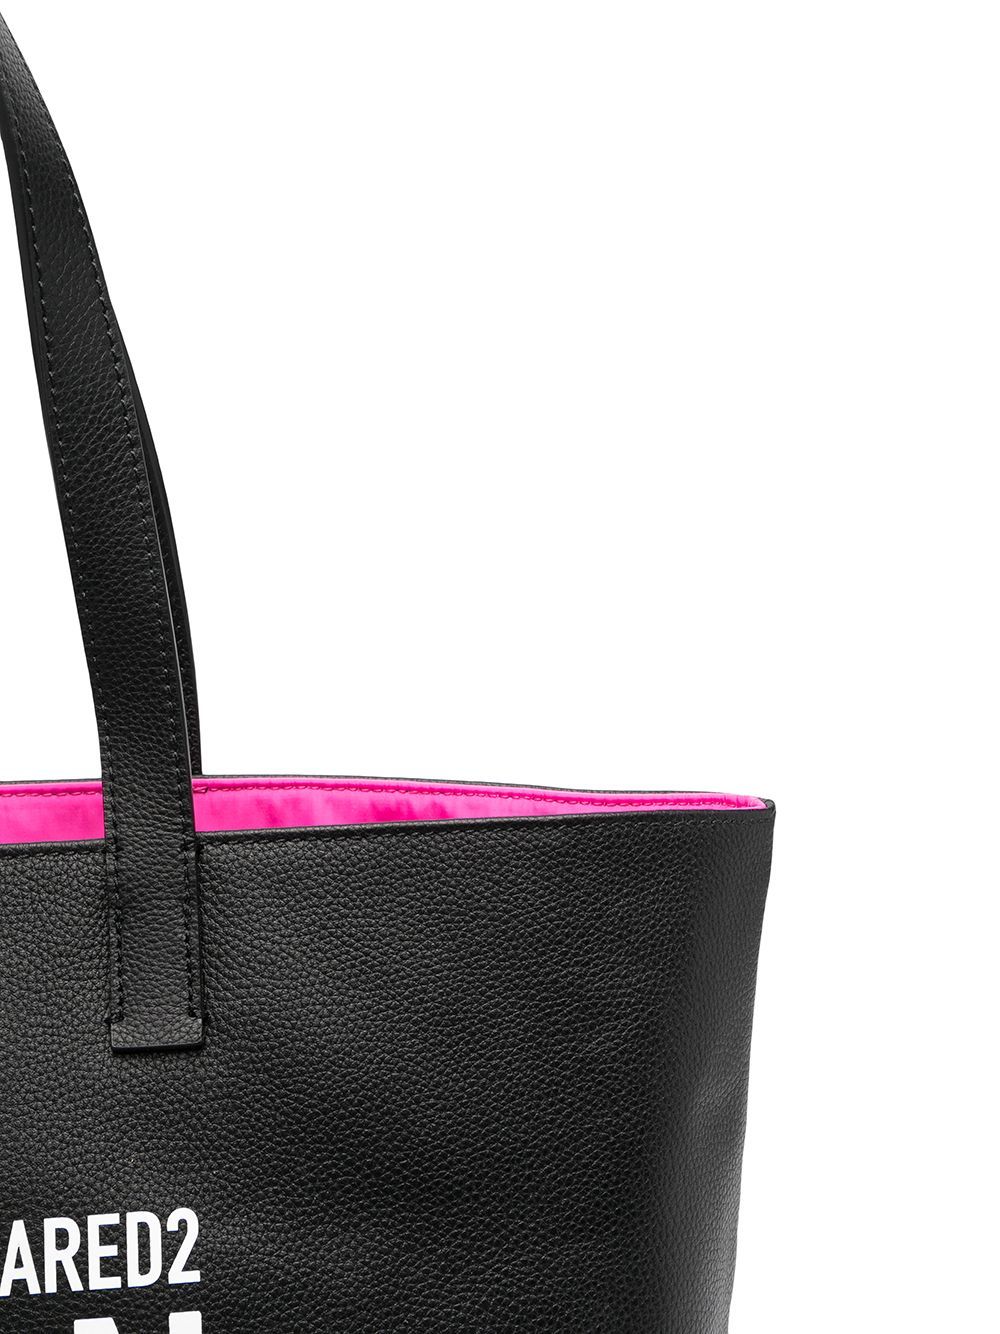 DSQUARED WOMEN Icon logo tote bag Black/Pink - MAISONDEFASHION.COM